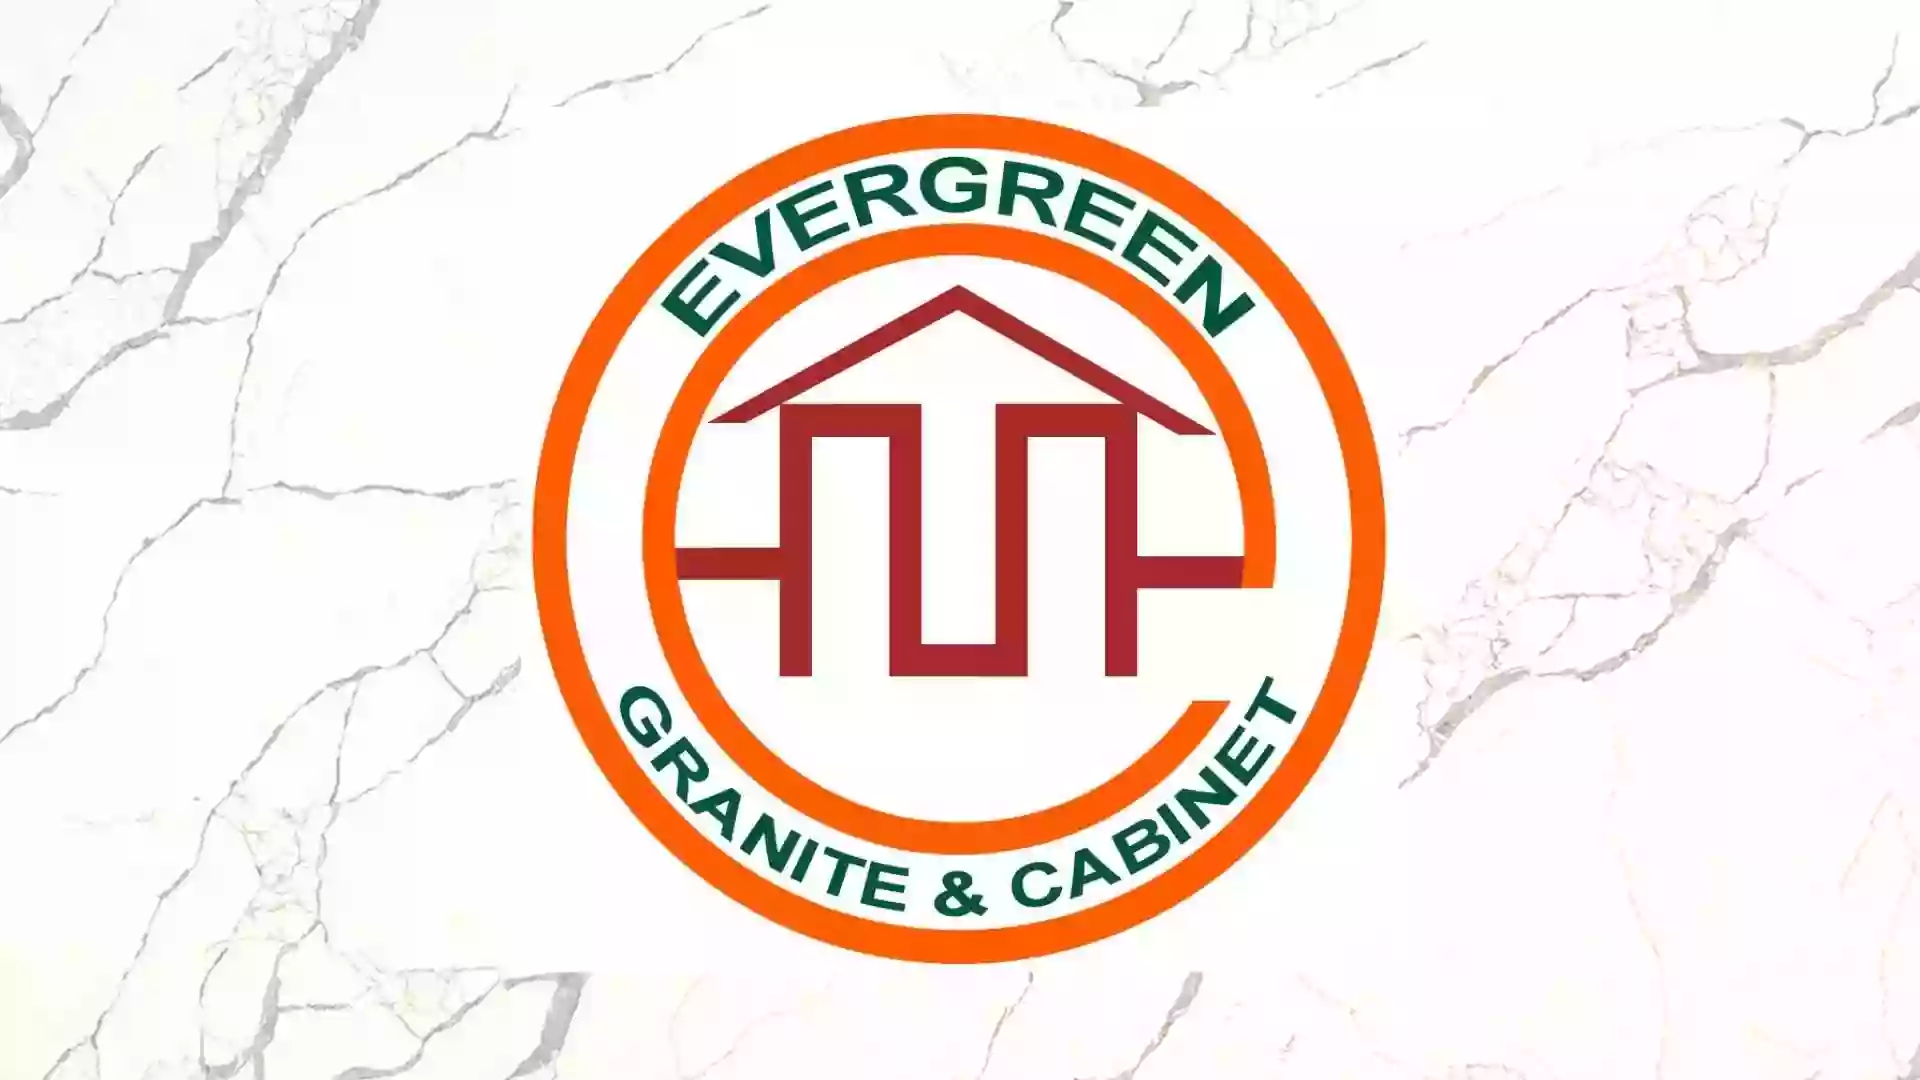 Evergreen Granite and Cabinet